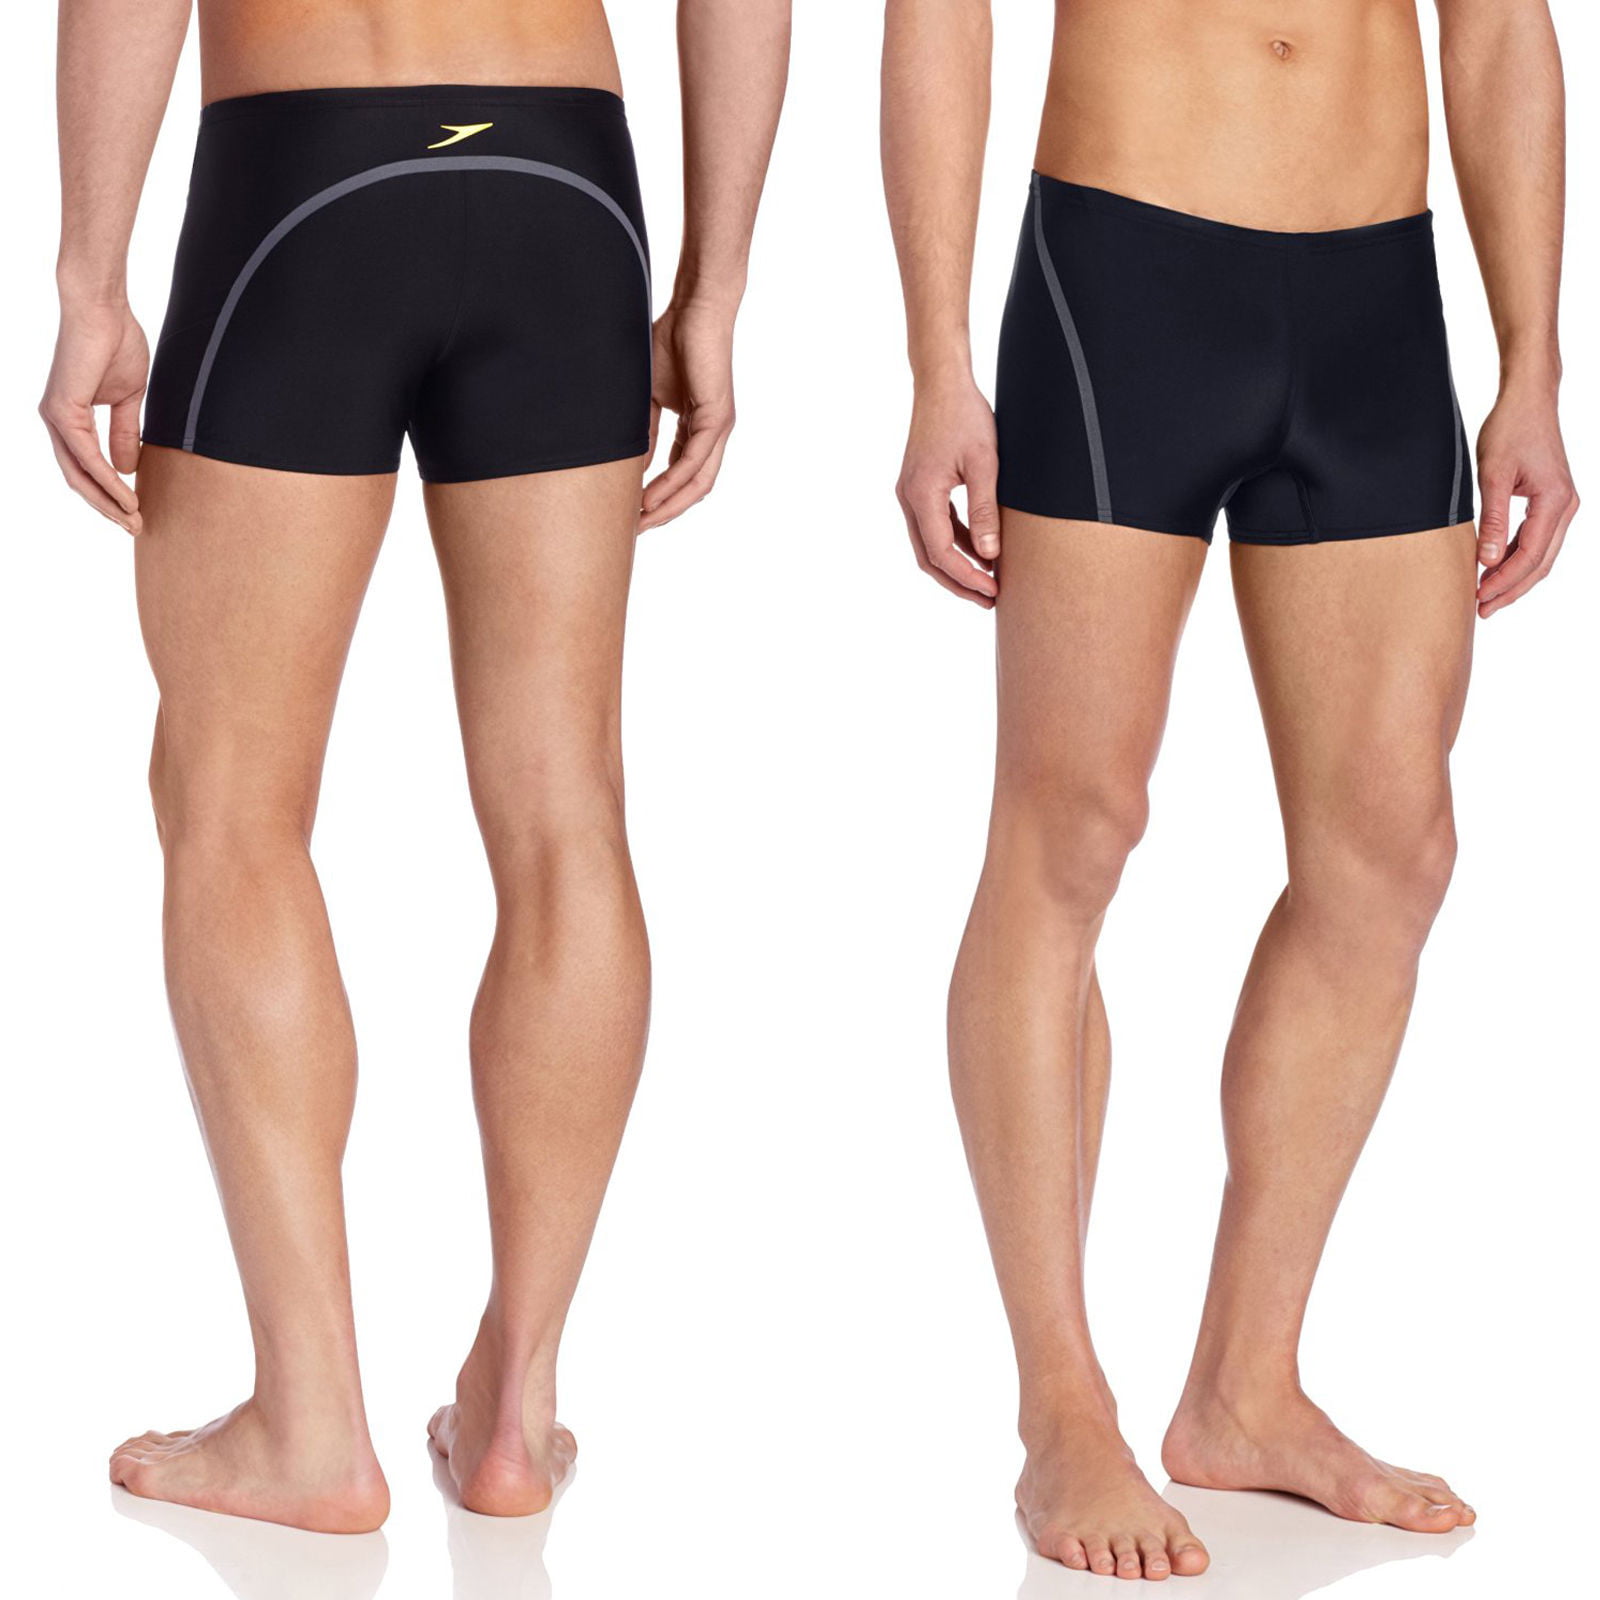 Panegy Men's Splice Jammer Compression Square Leg Swimsuit Solid Briefs 